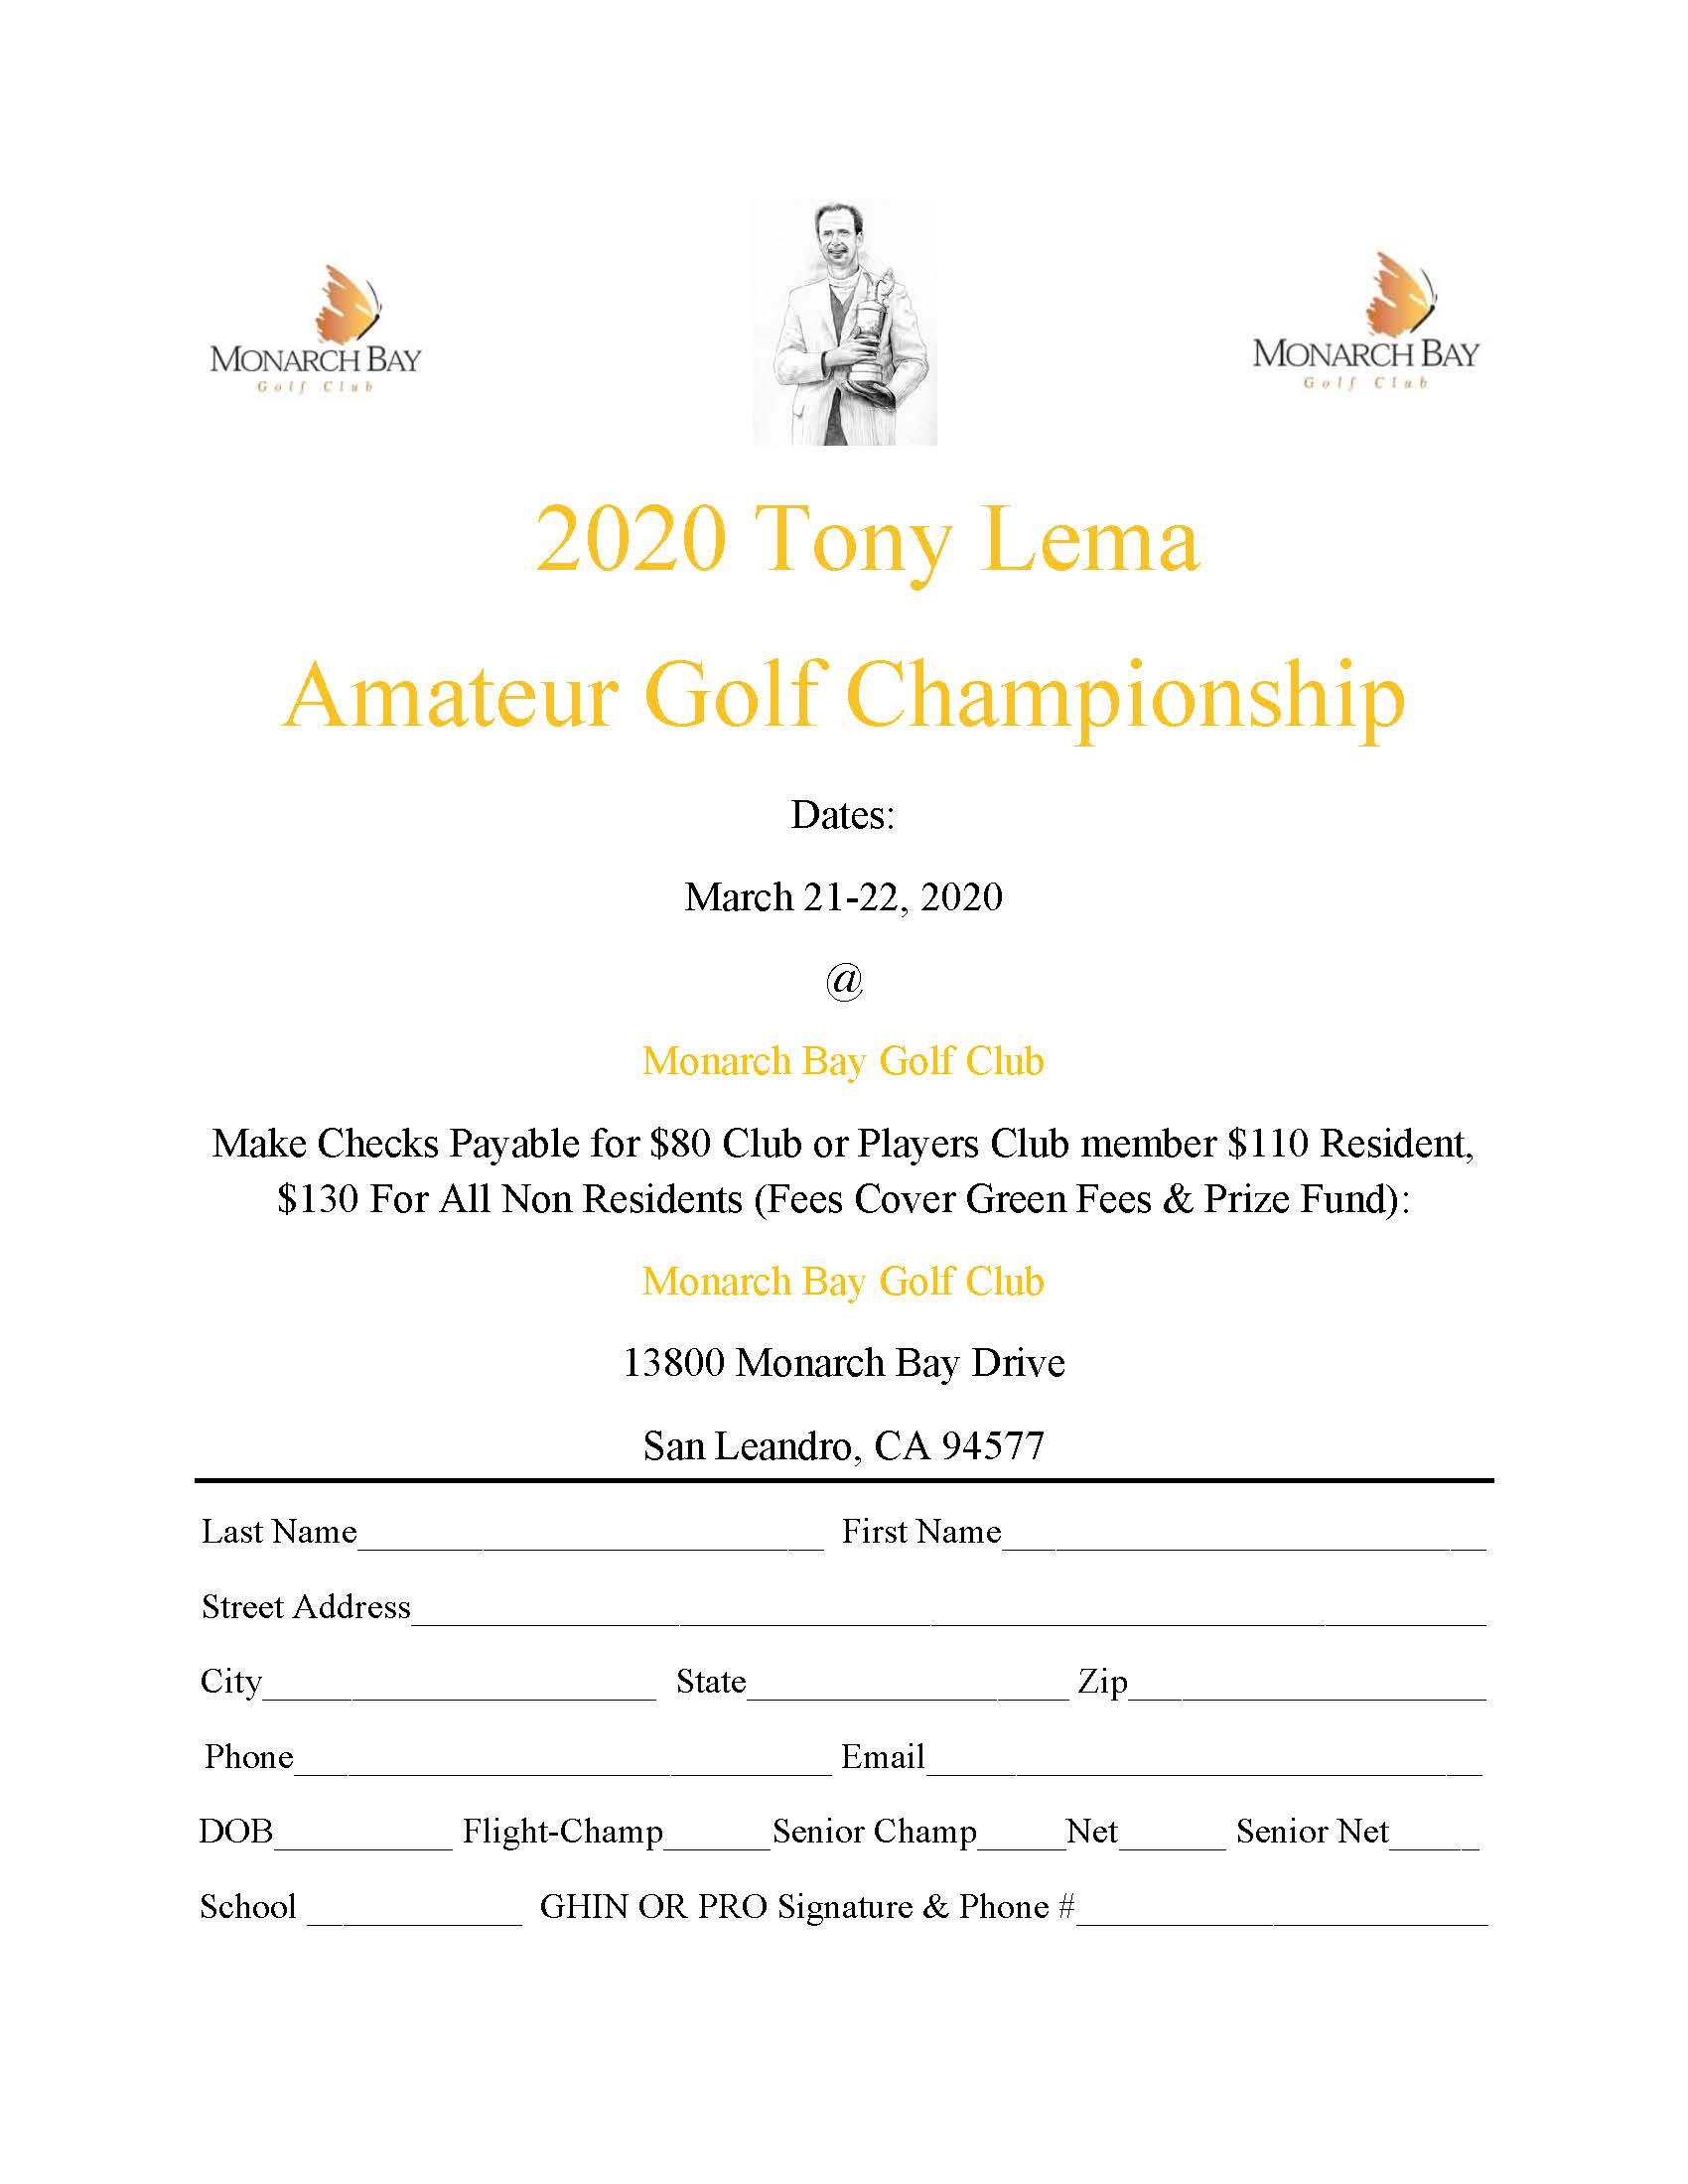 Tony Lema Amateur Golf Championship